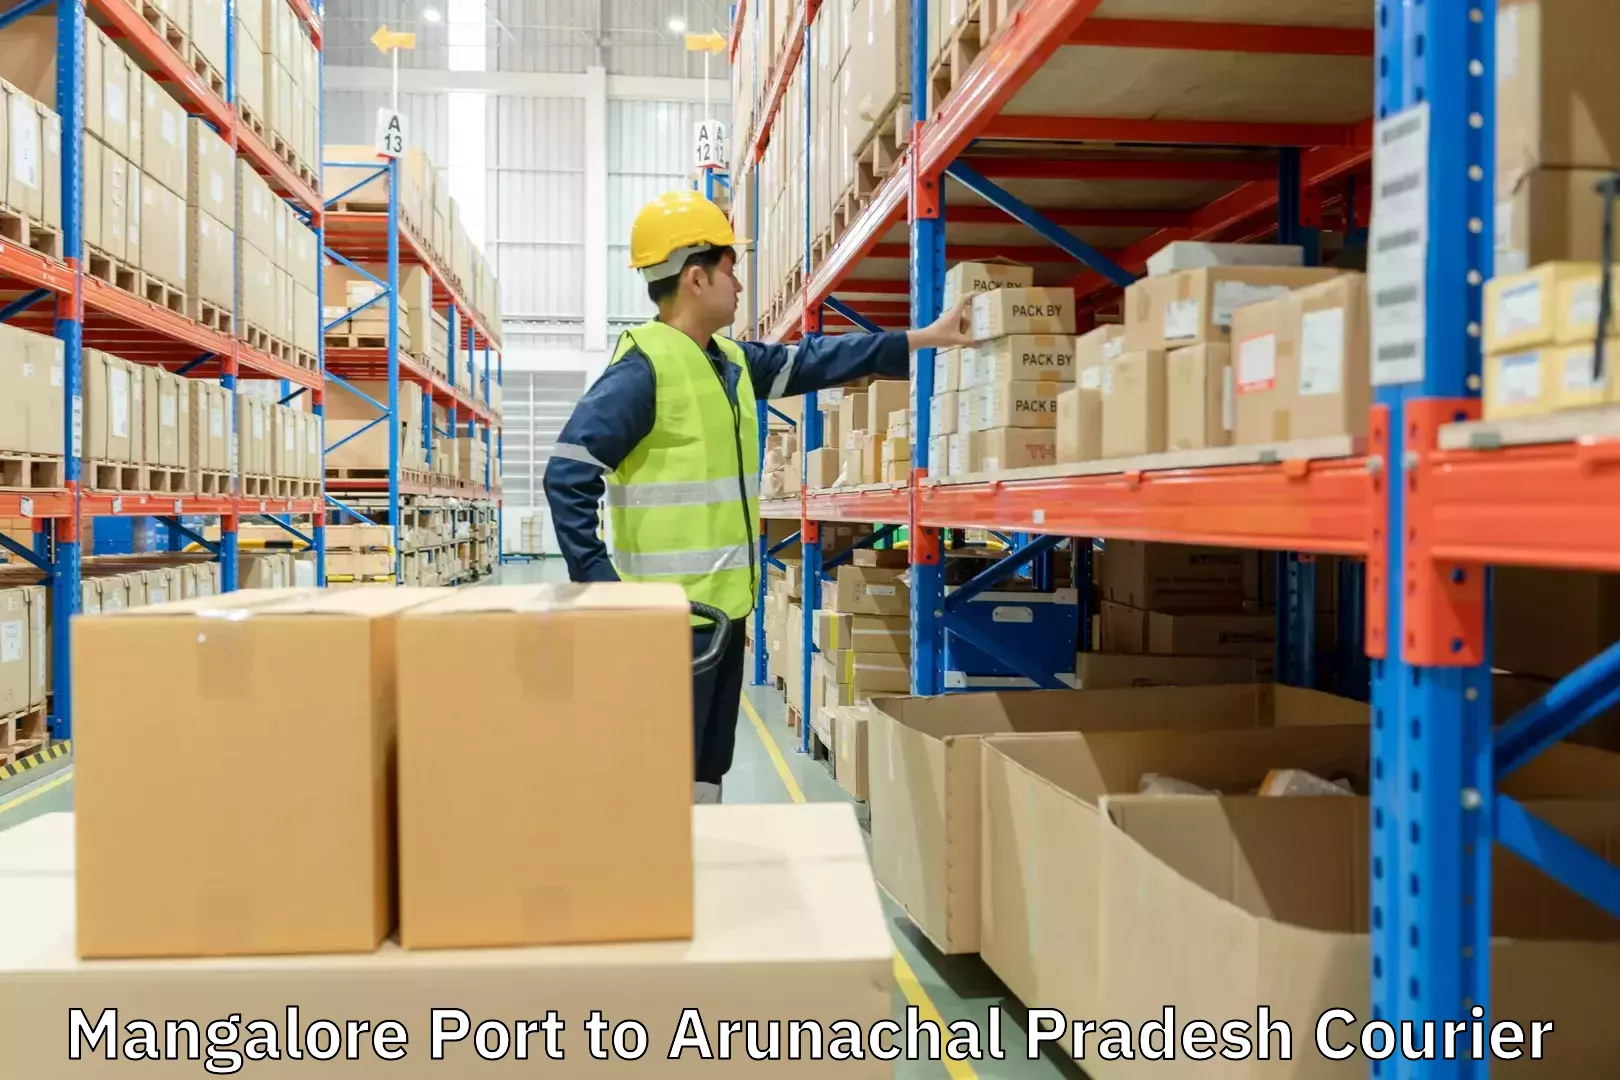 Logistics service provider Mangalore Port to Arunachal Pradesh